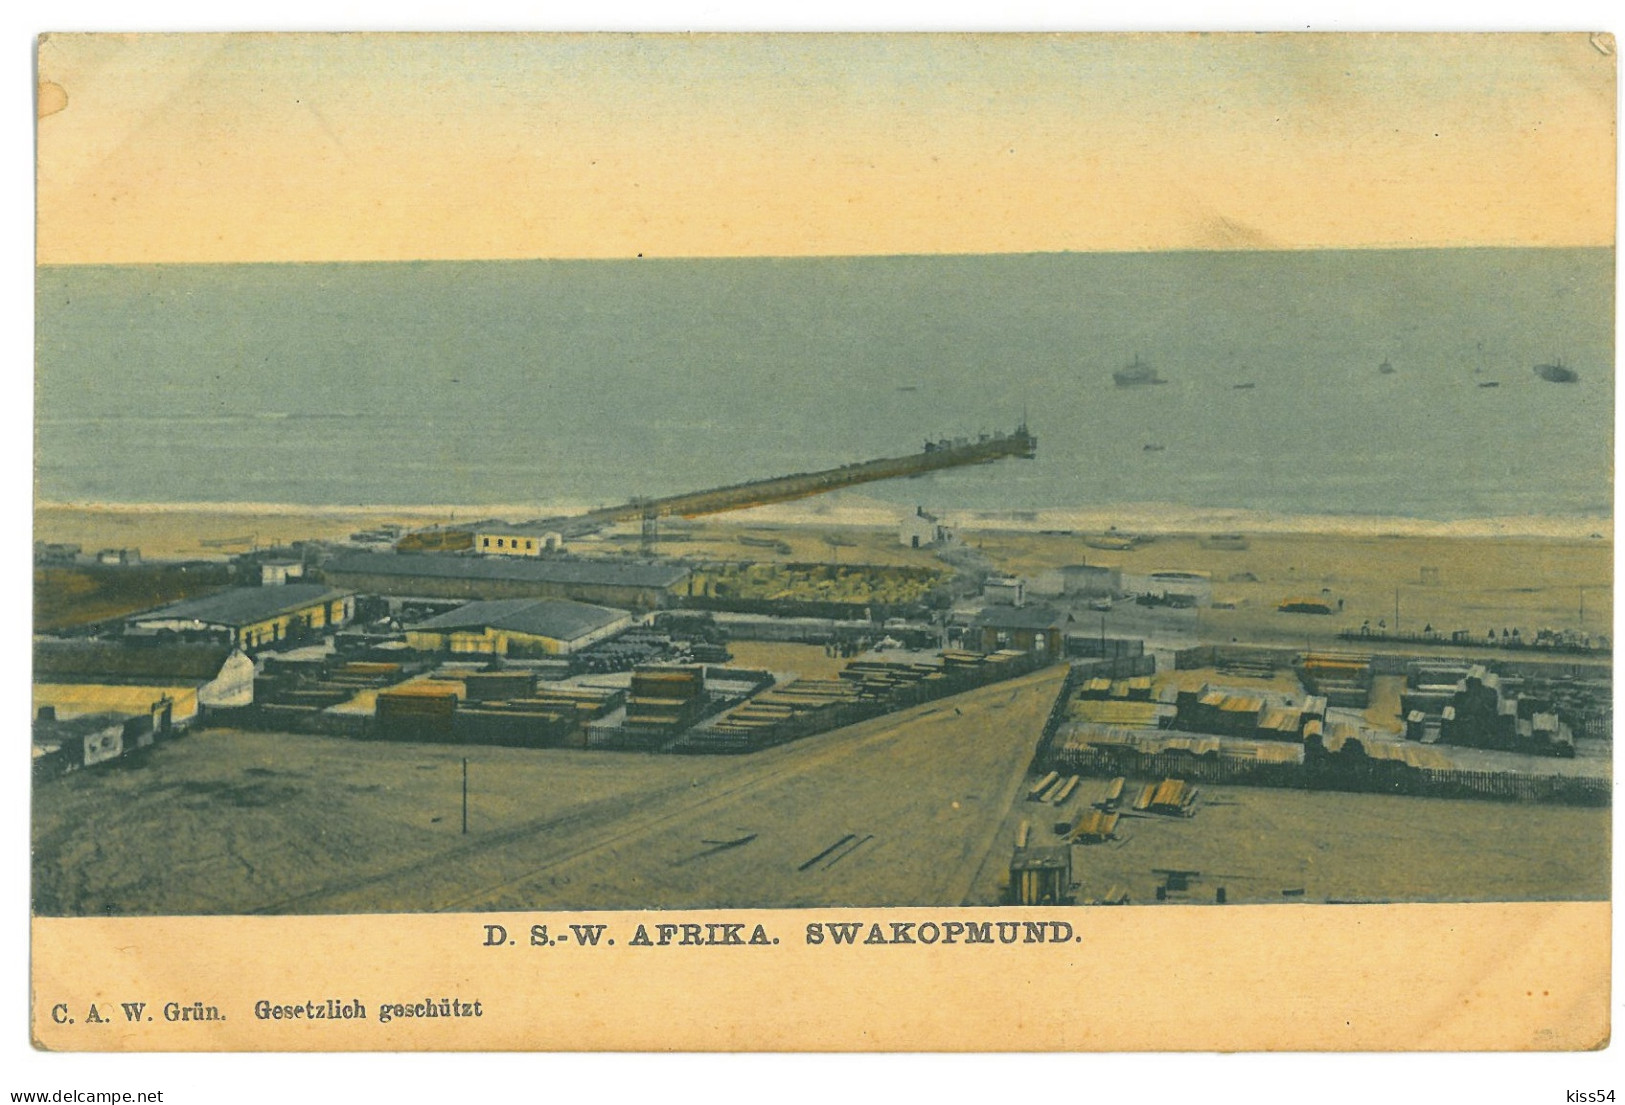 NAM 8 - 23797 SWAKOPMUND, Harbor & Wharf, D.S.W. Afrika, Namibia - Old Postcard - Unused - Namibie